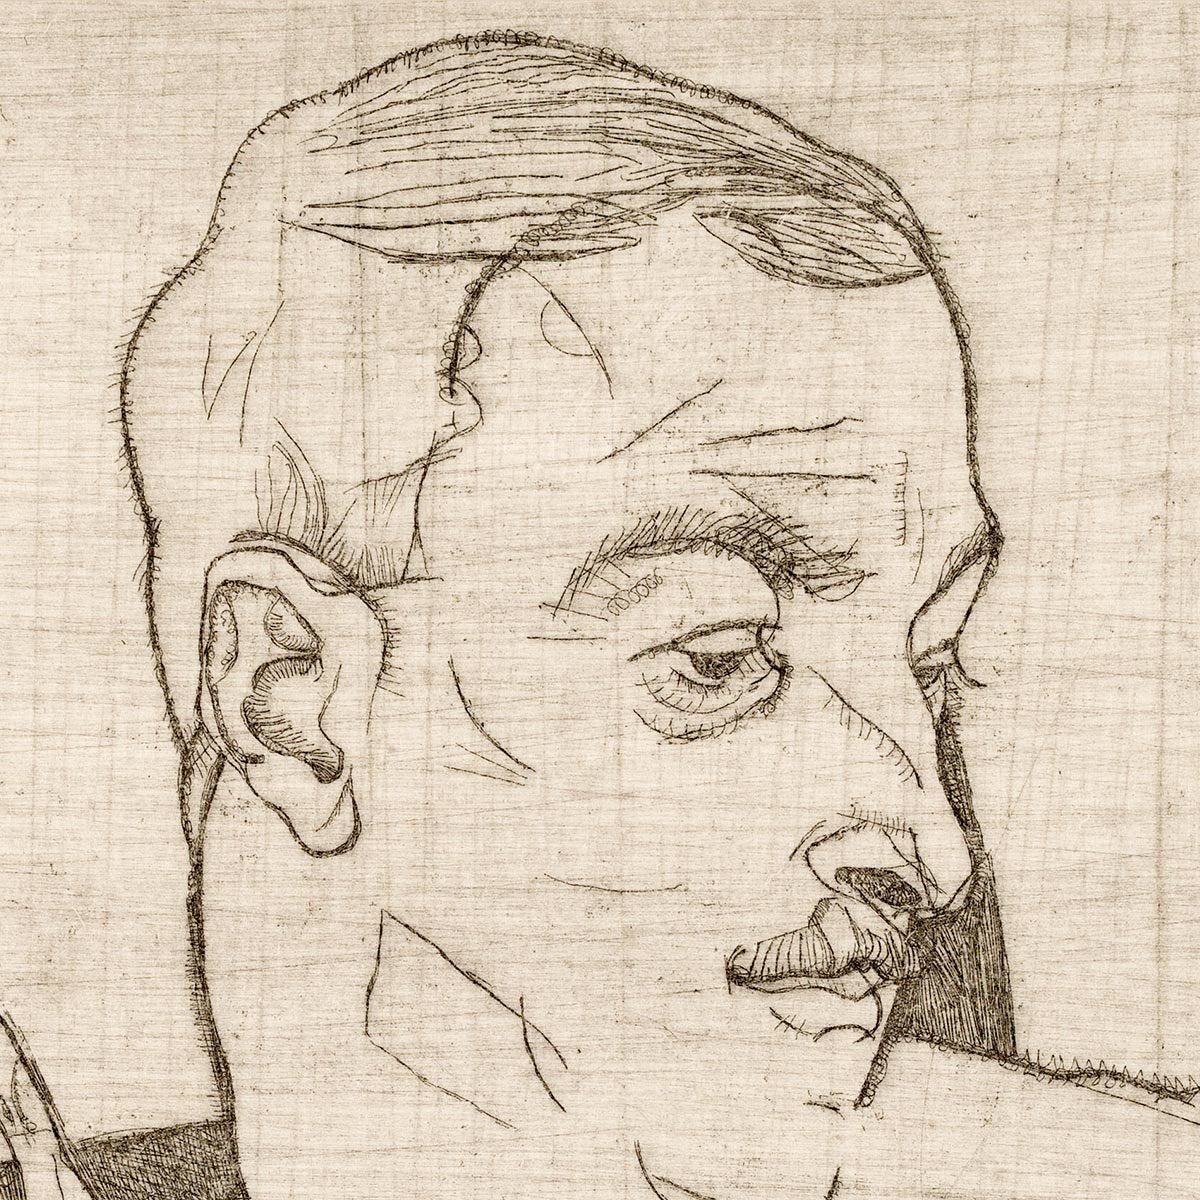 Portrait of Arthur Roessler by Egon Schiele